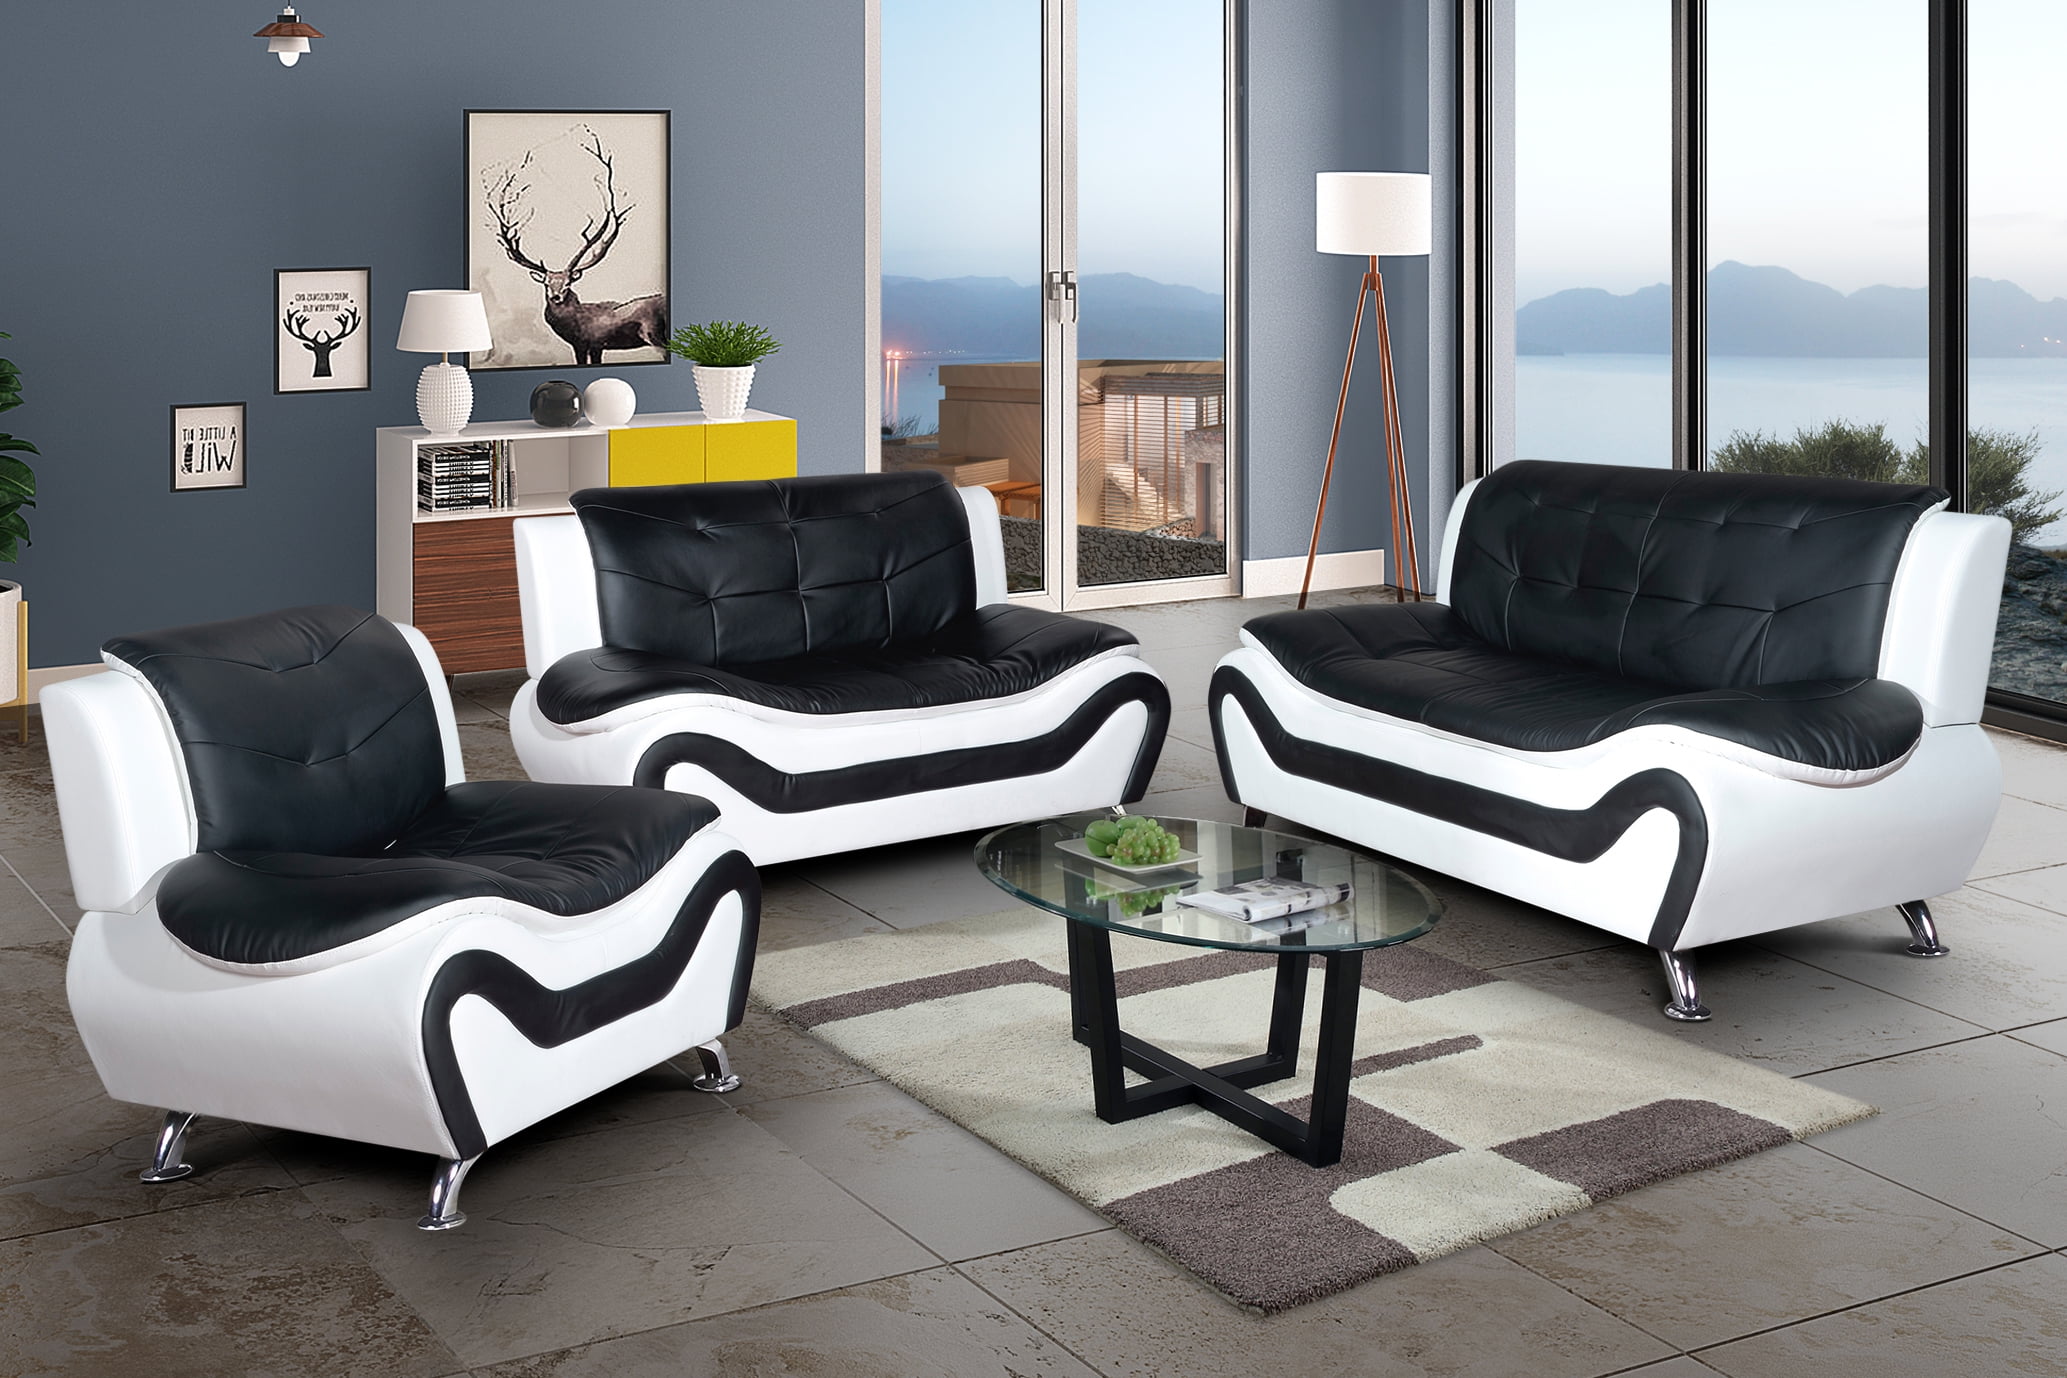 3 Piece Living Room Sofa Set, Sofa/Loveseat/Chair, Black & White Color